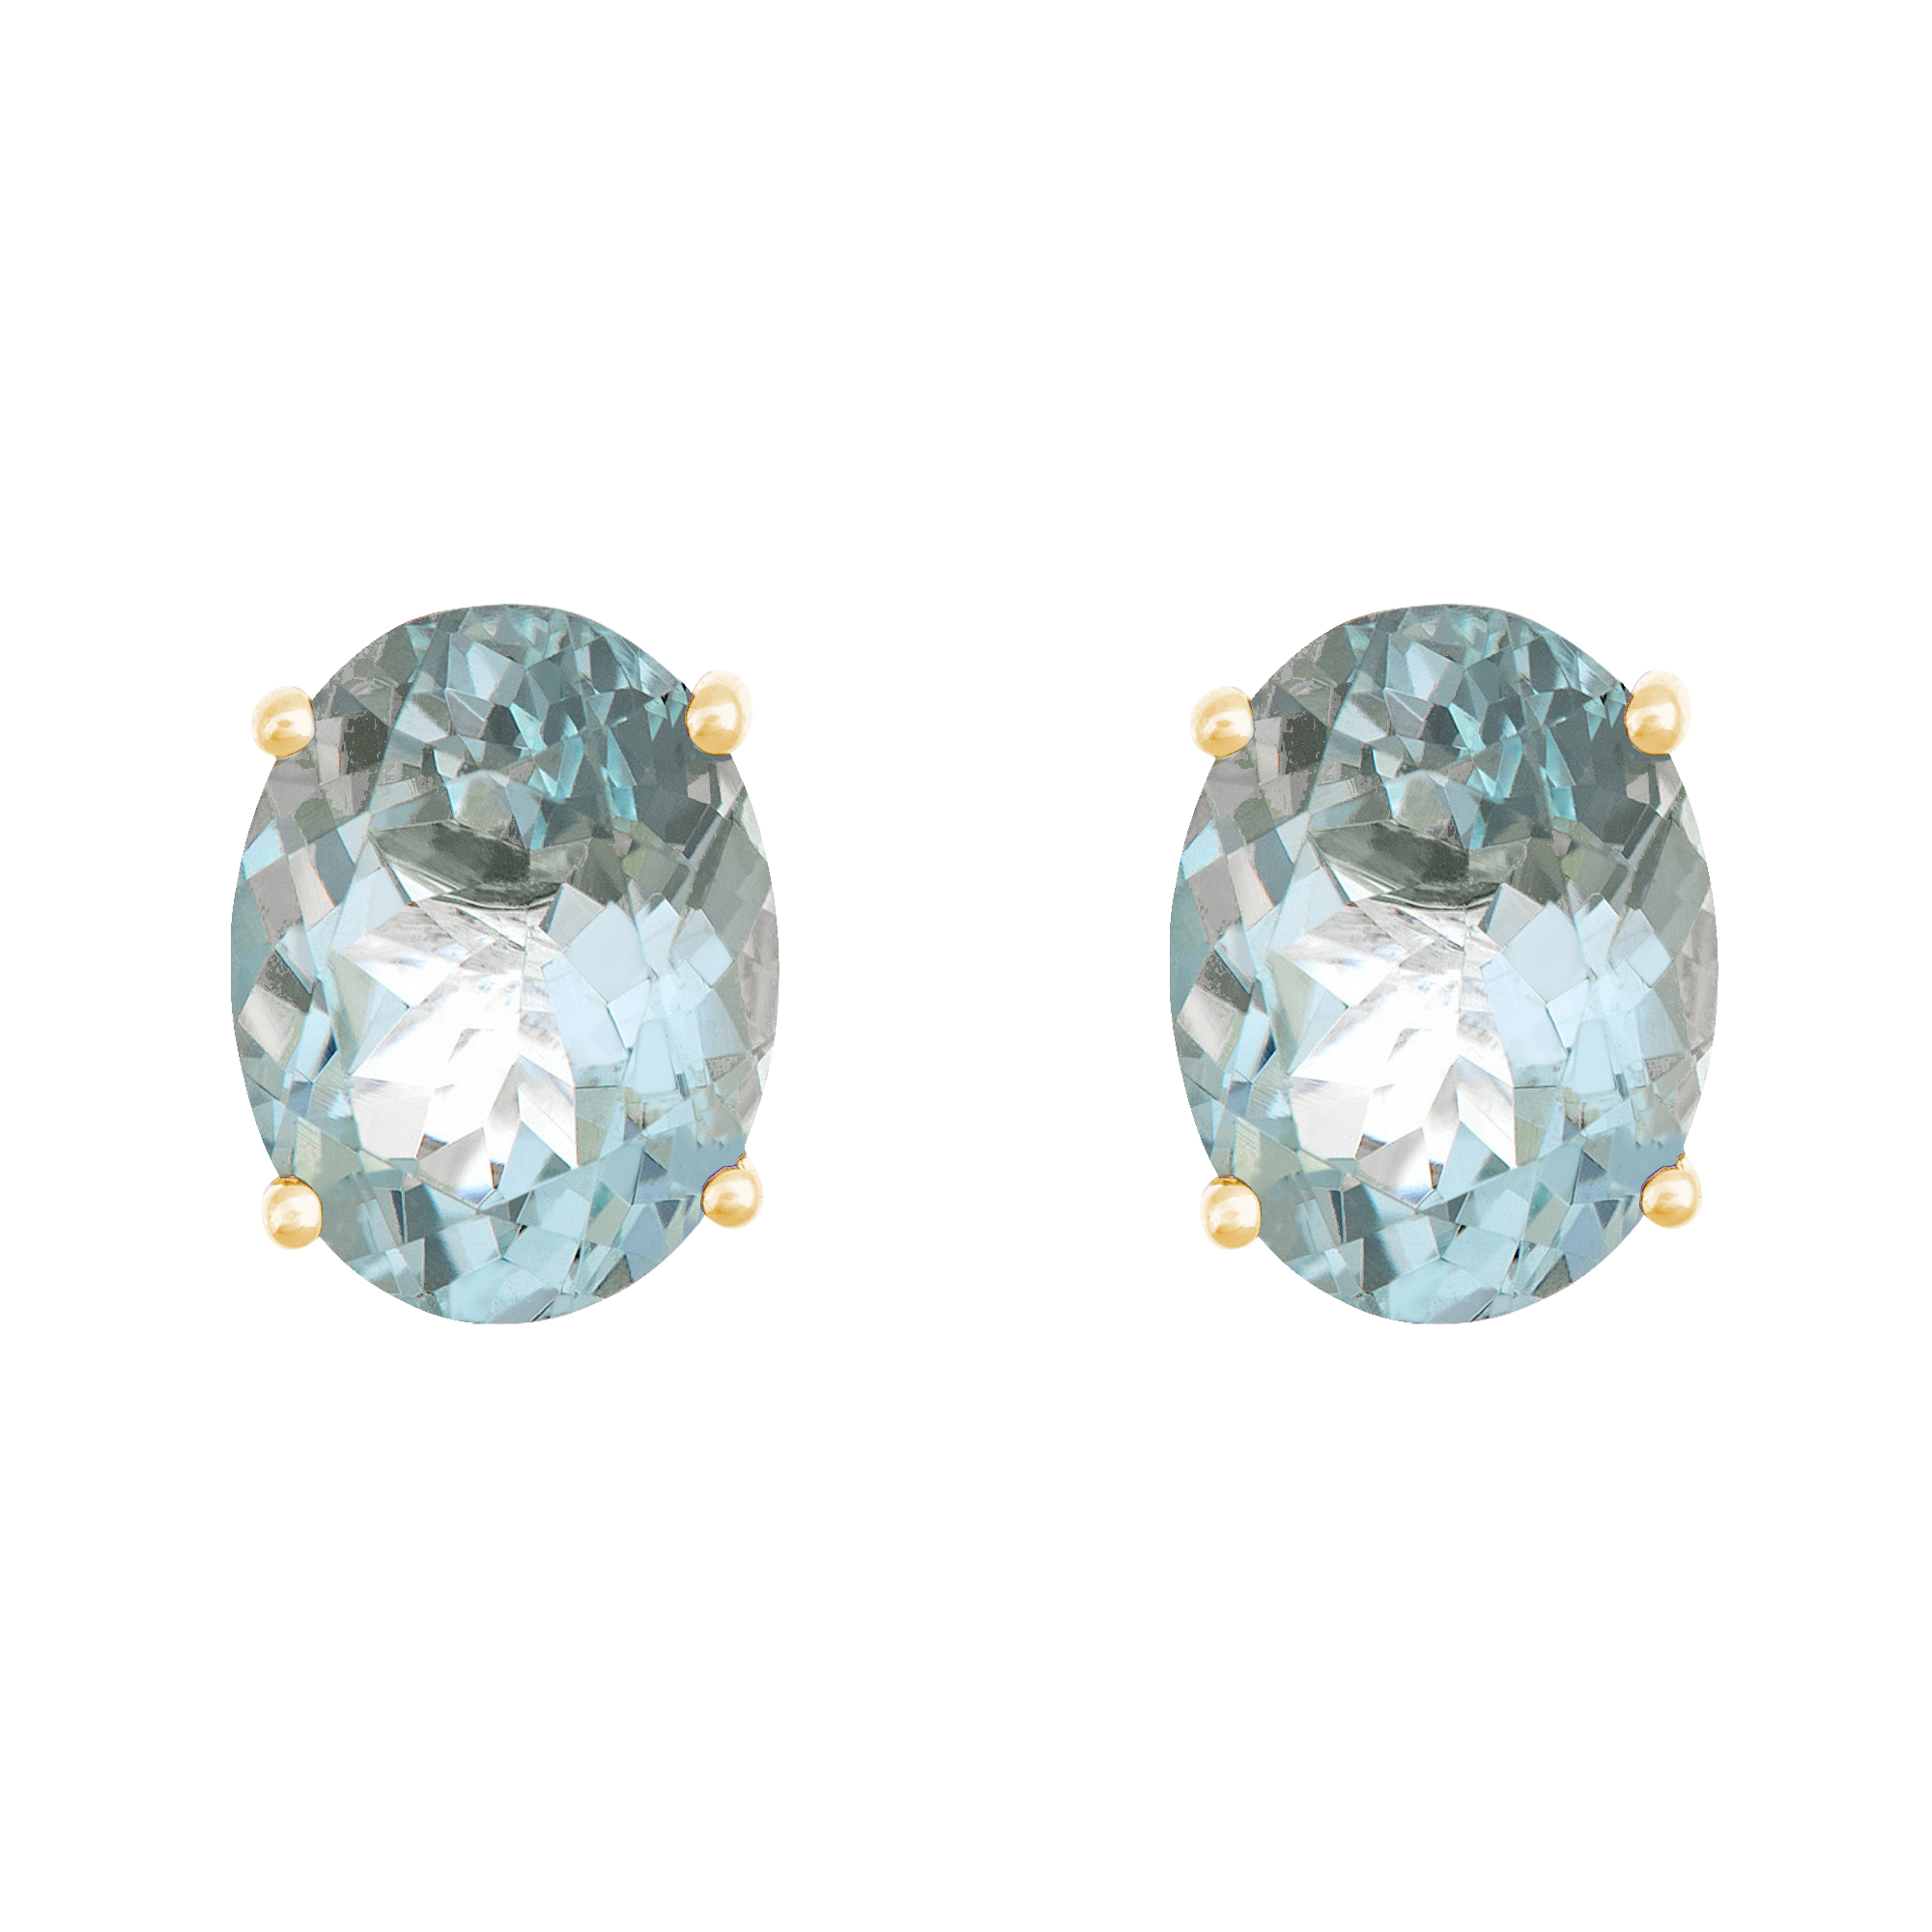 8x6mm oval birthstone stud earrings  14kt yellow gold